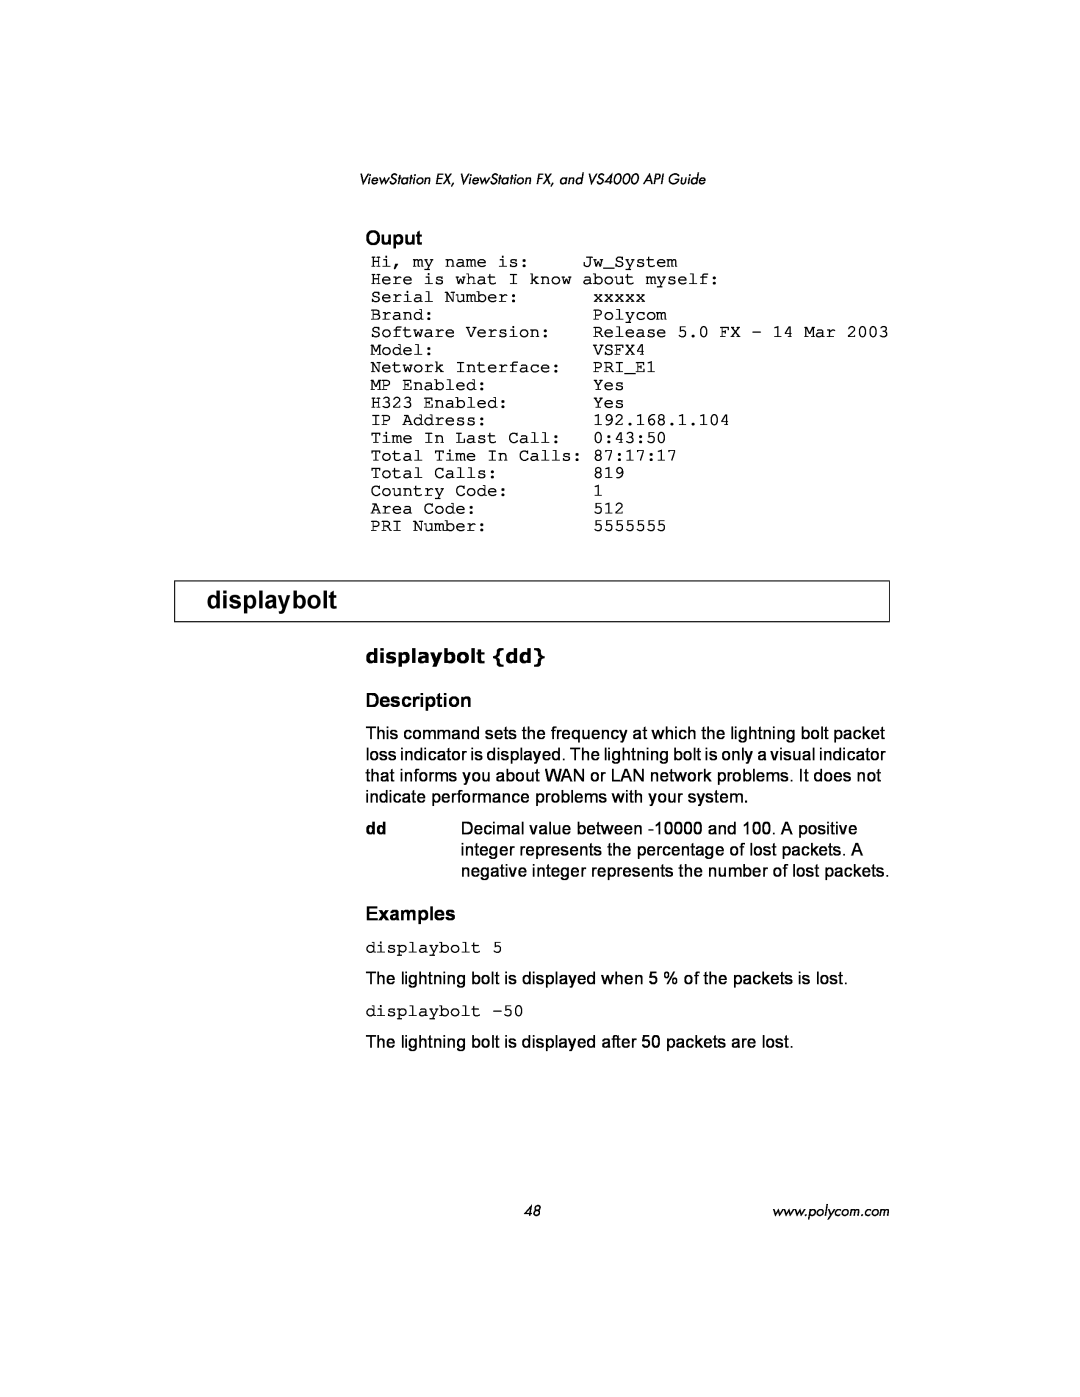 Polycom VIEWSTATION EX manual Ouput, displaybolt dd, Description, Examples 